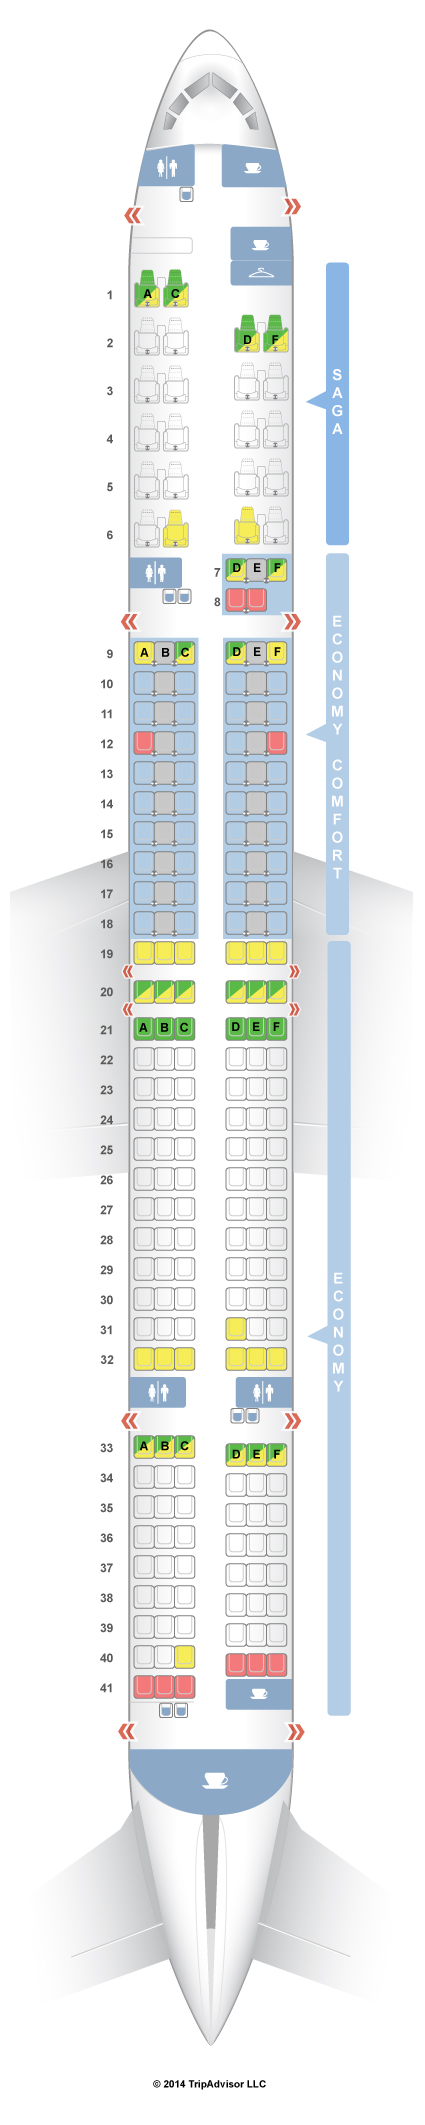 United 757 Seating Chart